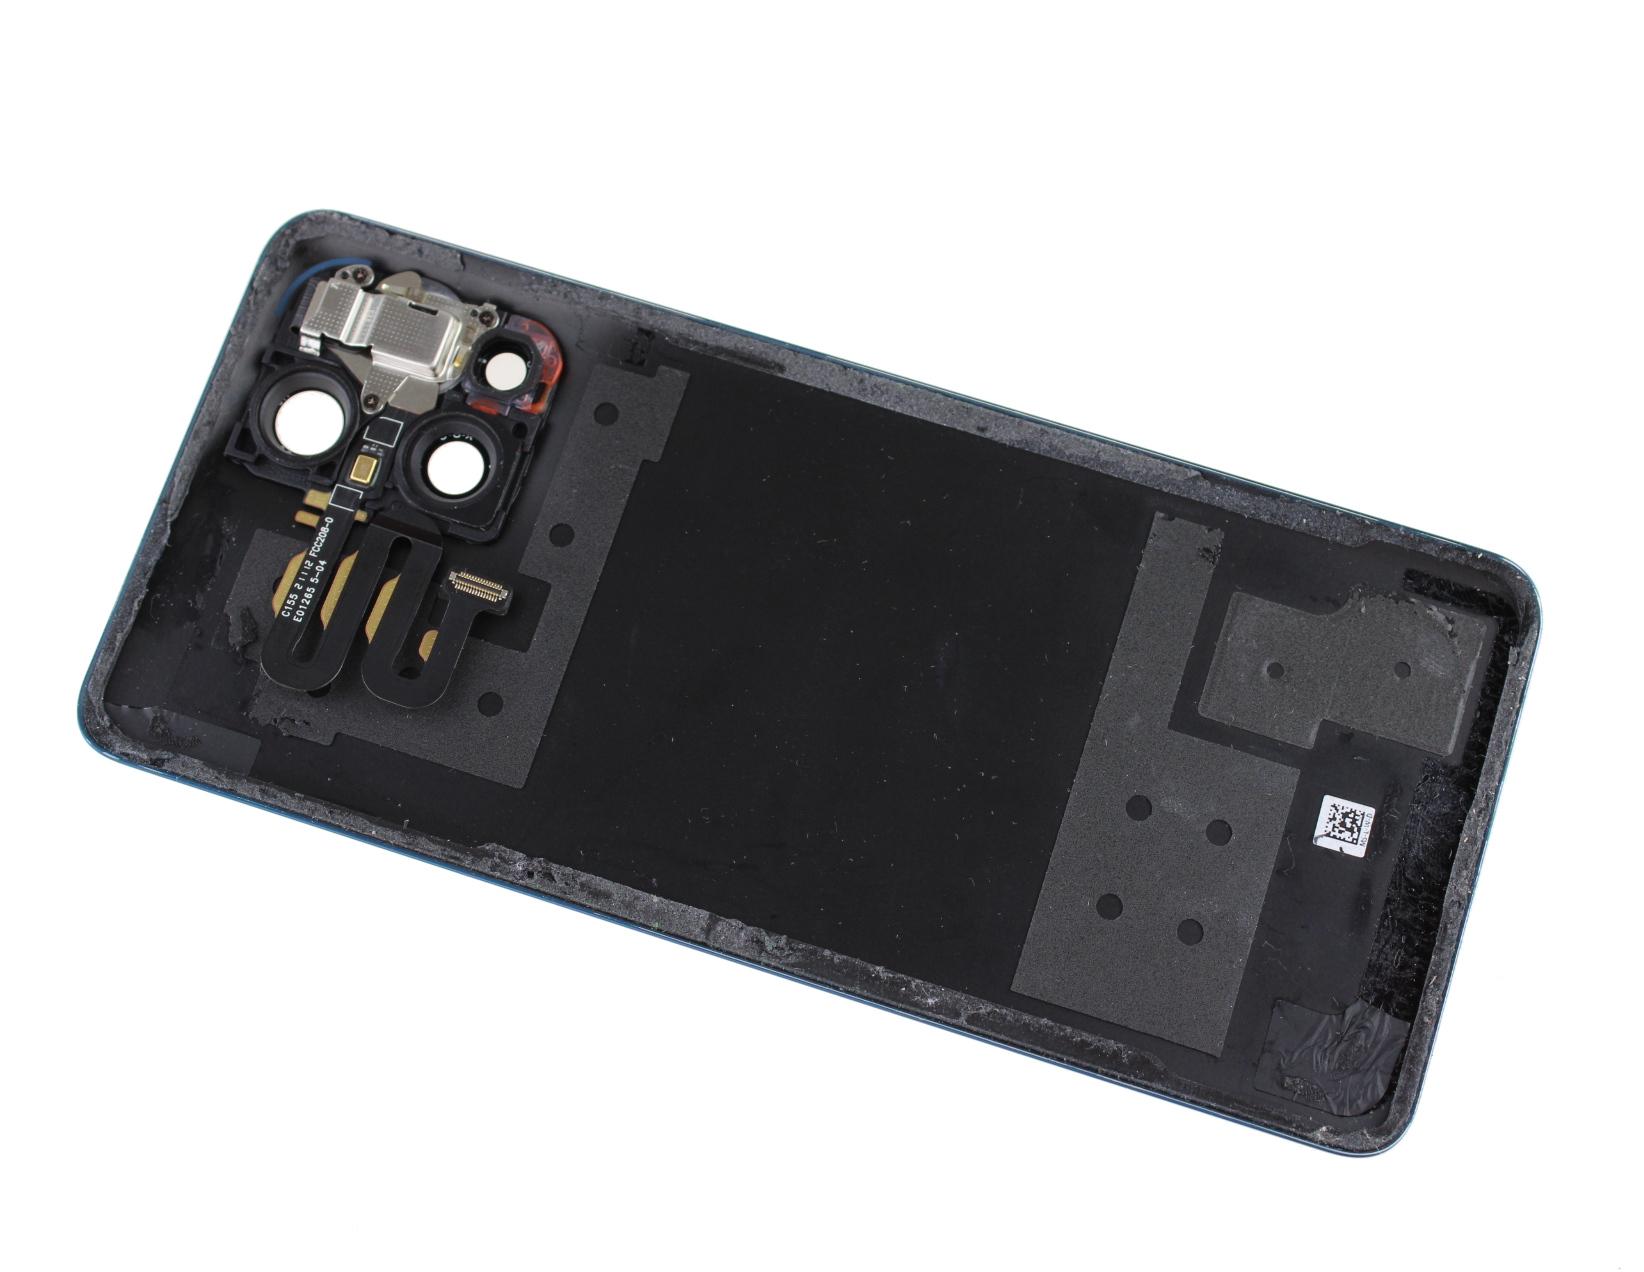 Originál kryt baterie Oppo Find X3 CPH2173 modrý - demontovaný díl